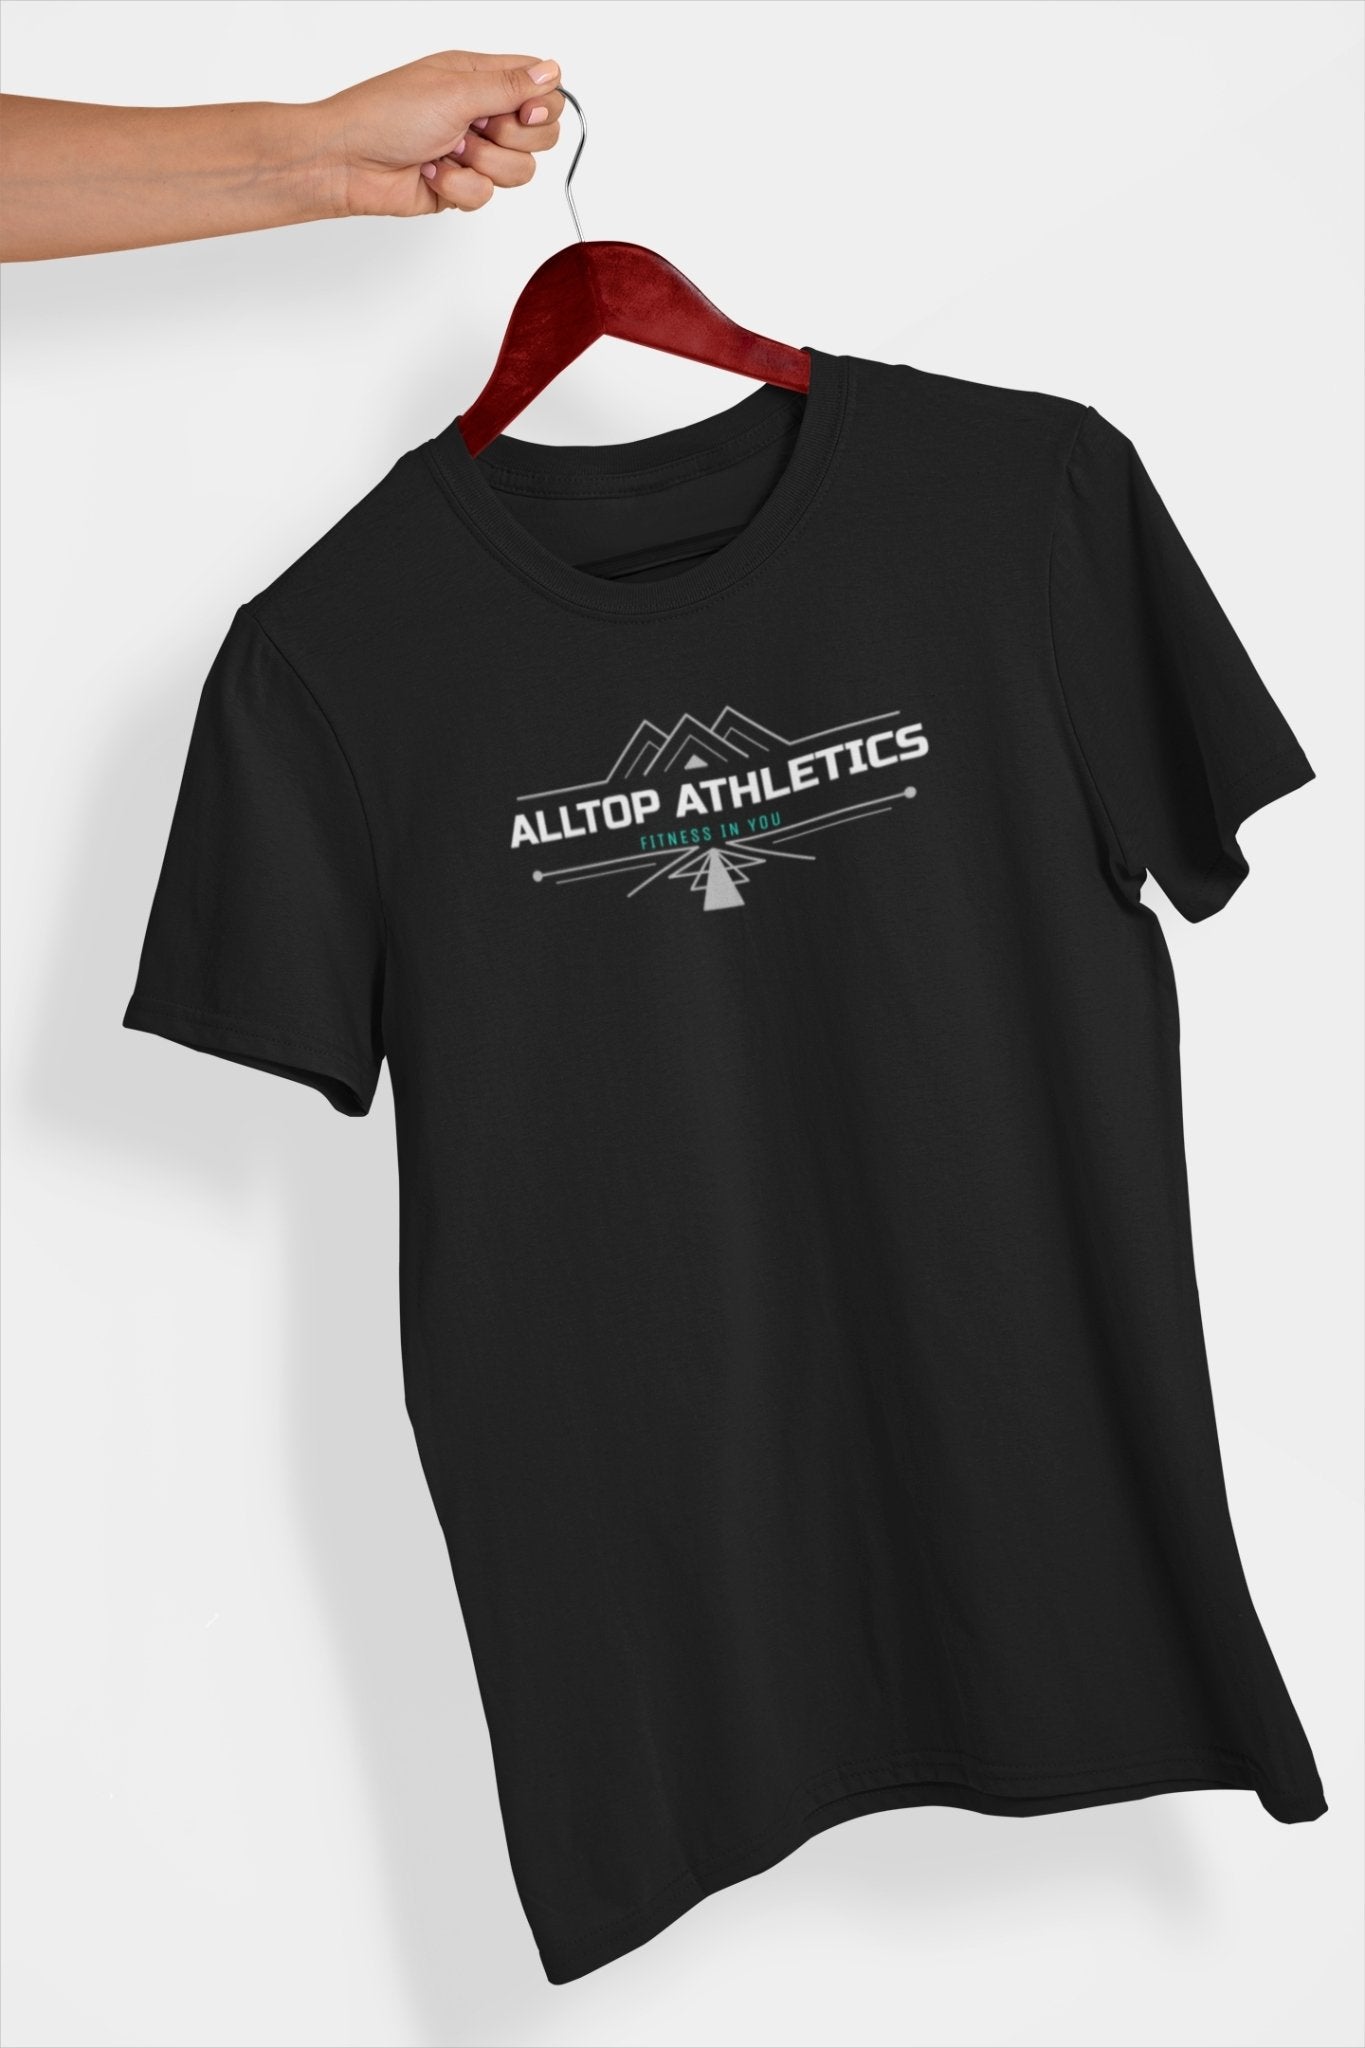 athletics shirt designs